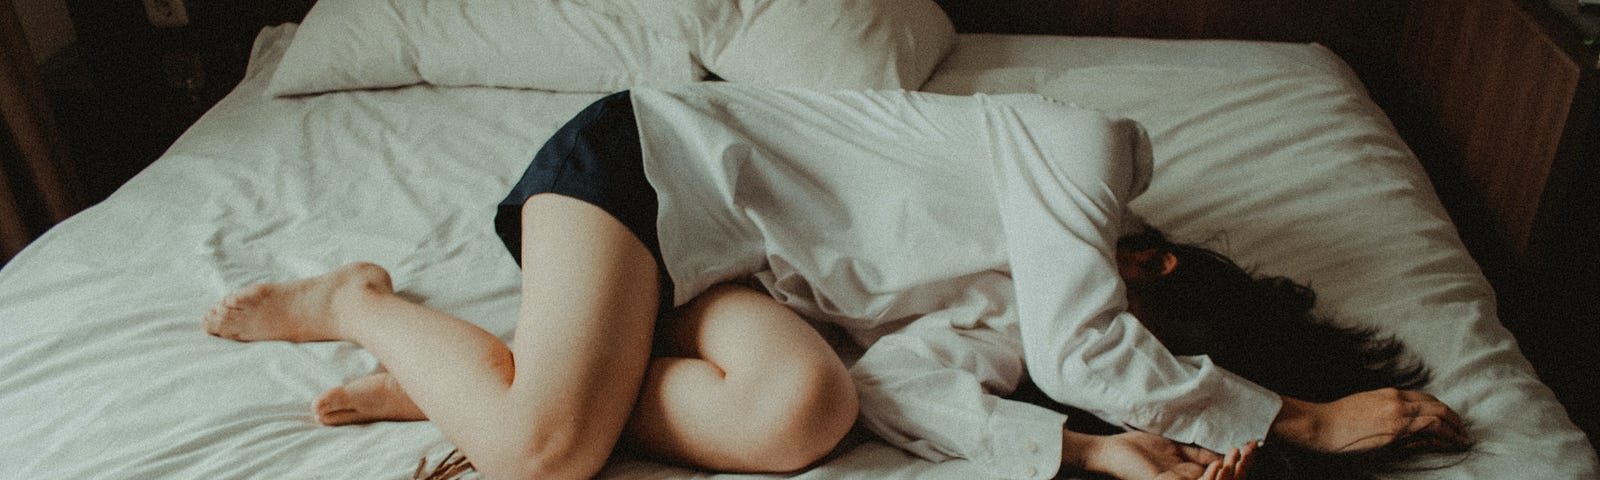 A girl lying in bed — looks dejected